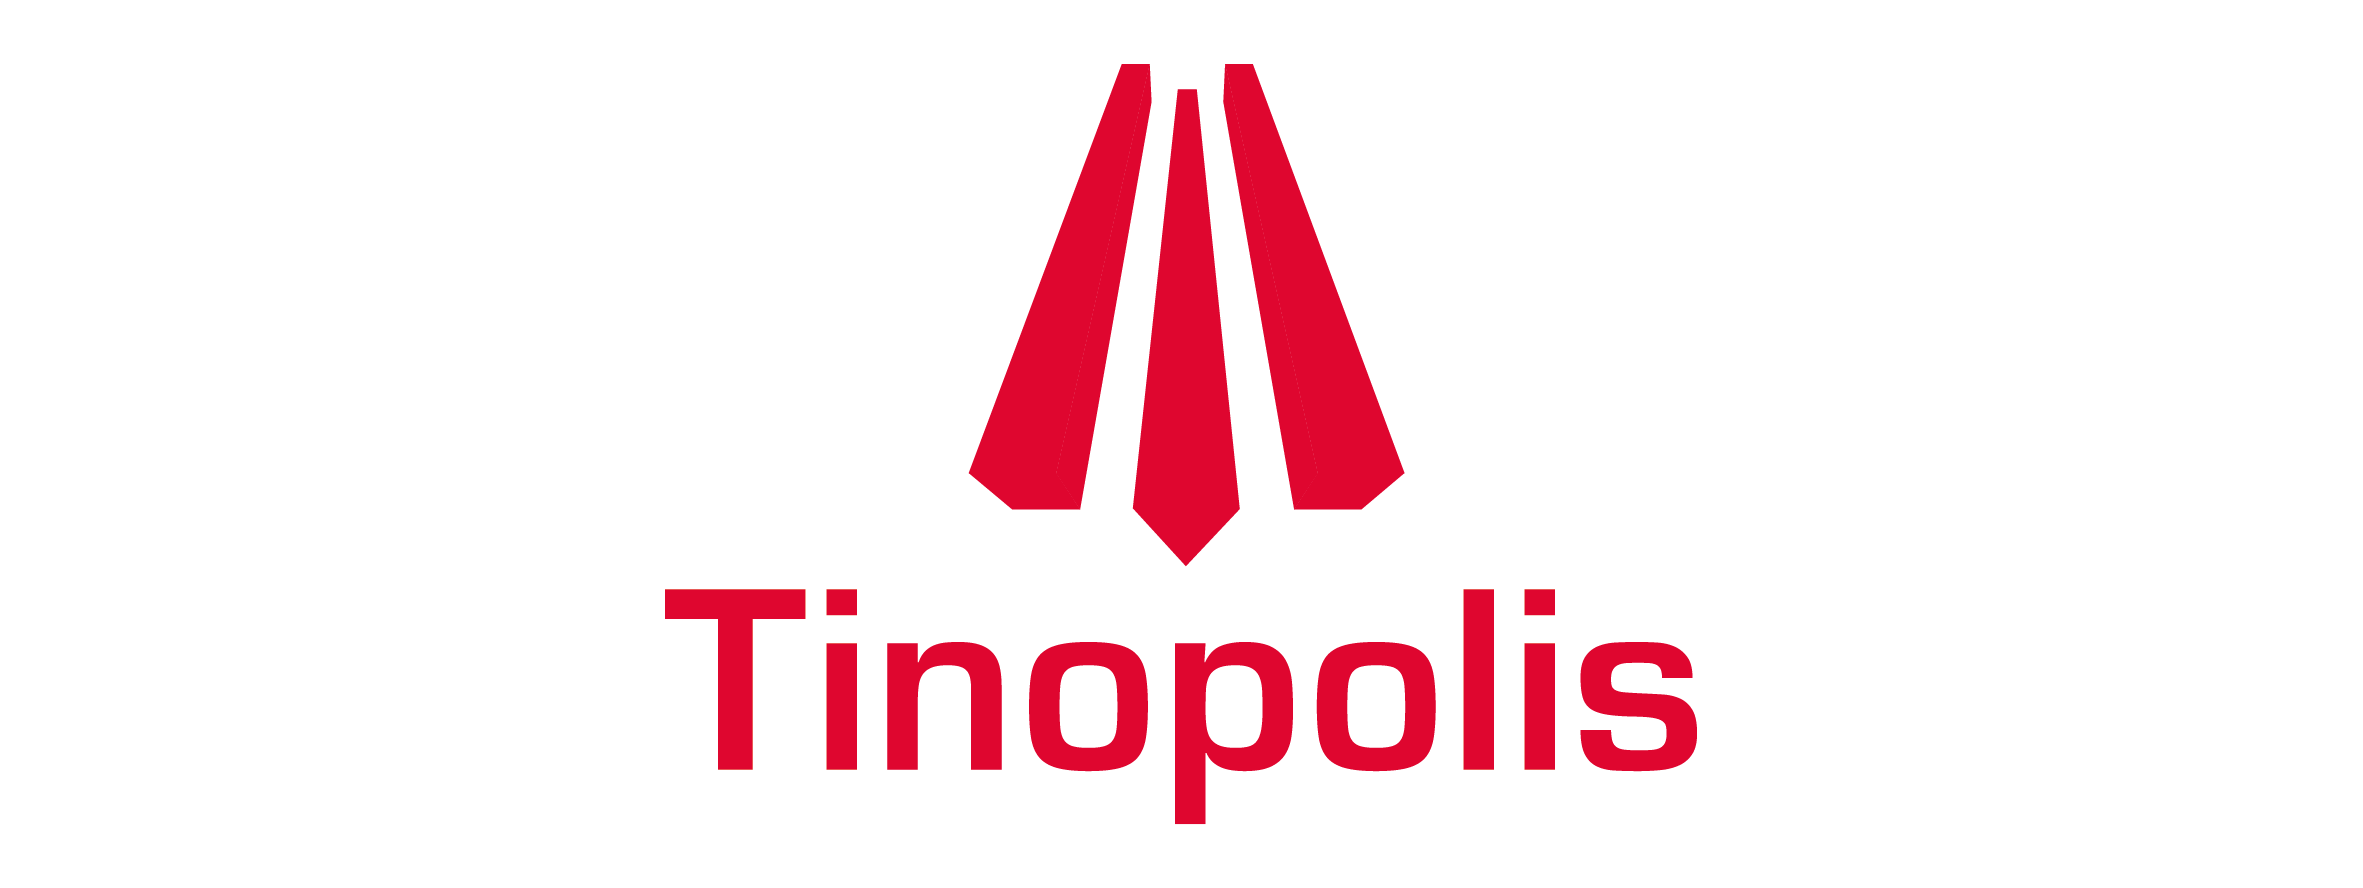 Tinopolis Group